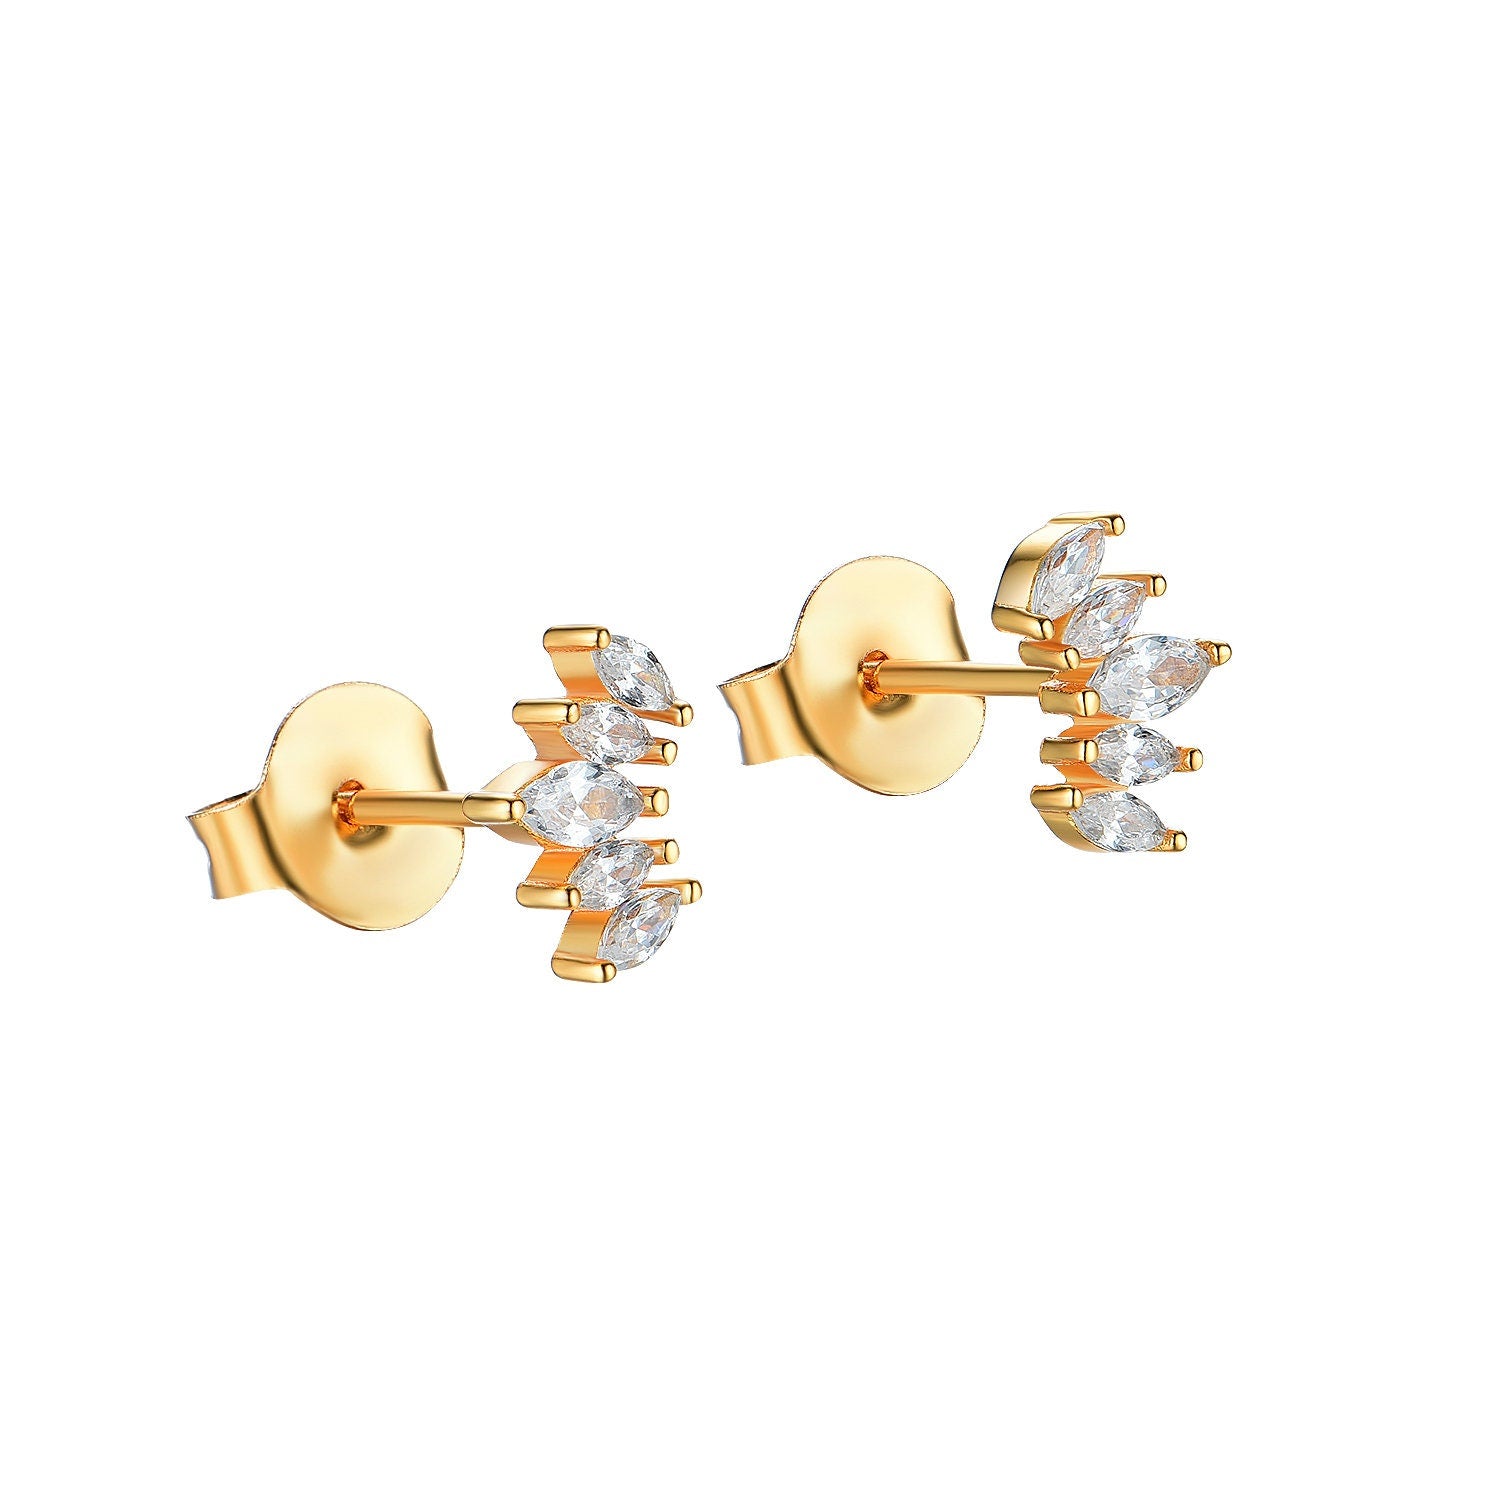 NIKOLA-Tiny Stud Earrings - New Minimalist Earrings - Minimalist Earrings Tiara- Studs - Tiny Earrings - Earrings for Multiple Piercings